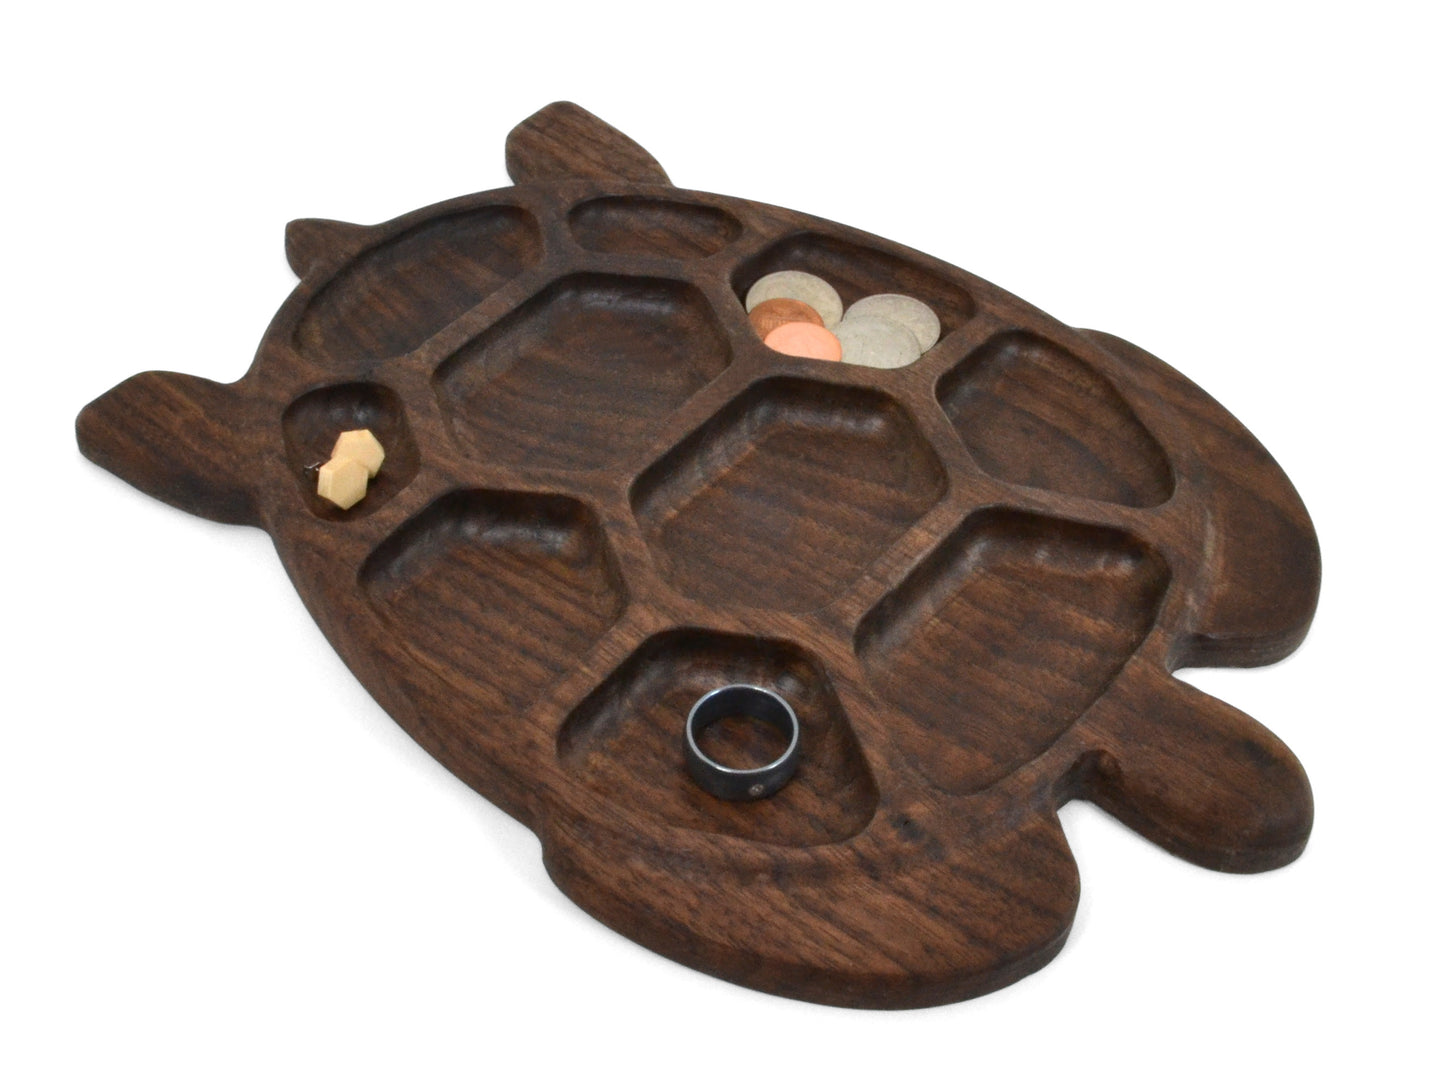 turtle ring dish with pockets, dark wood grain